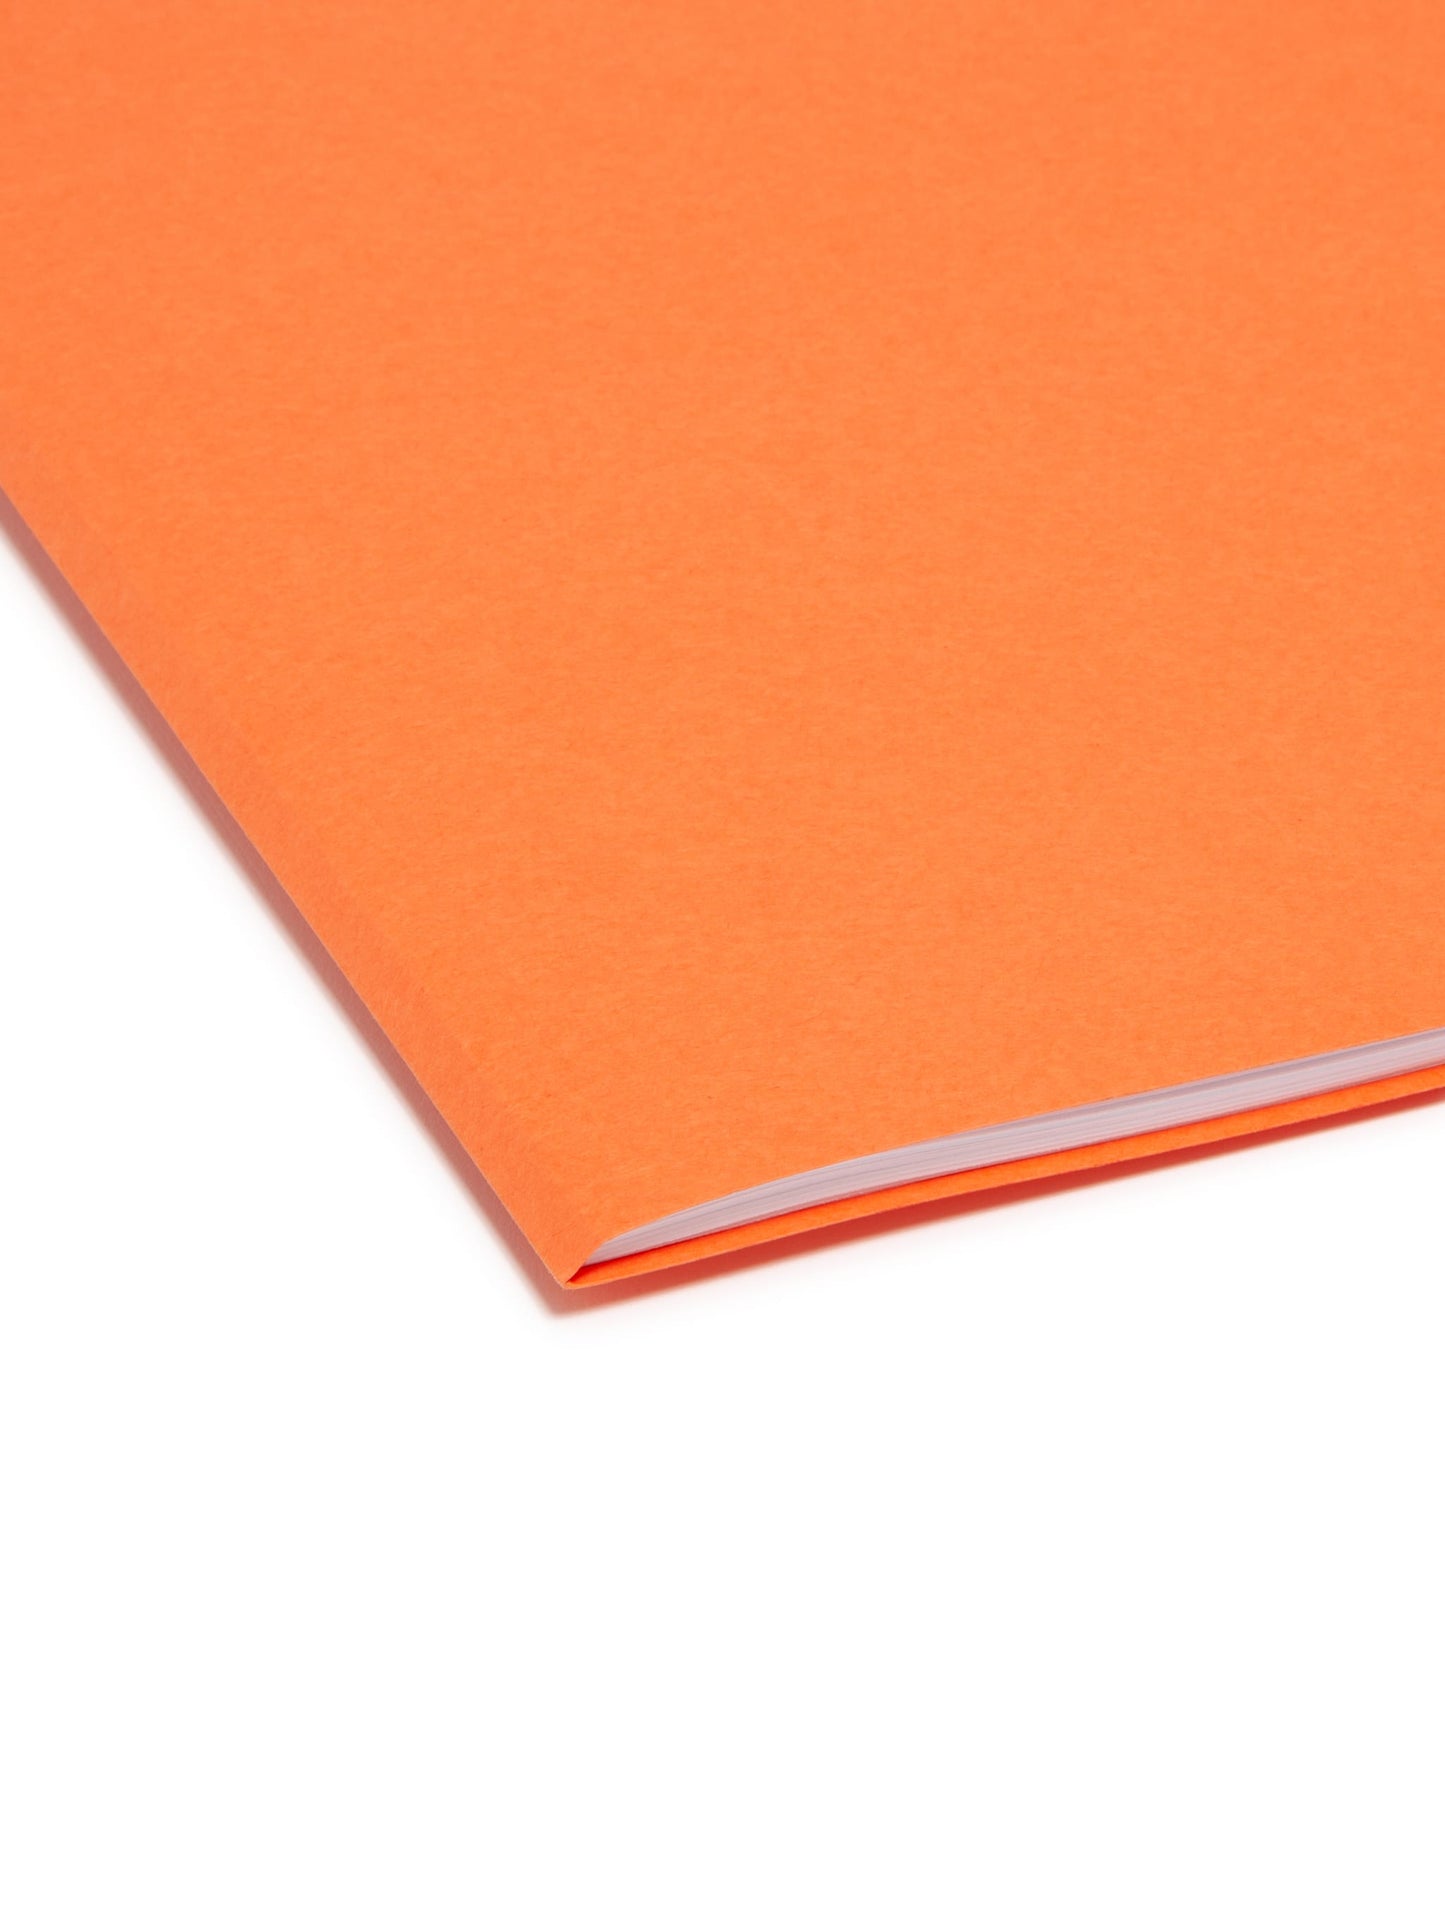 Reinforced Tab File Folders, 1/3-Cut Tab, Orange Color, Letter Size, Set of 100, 086486125345